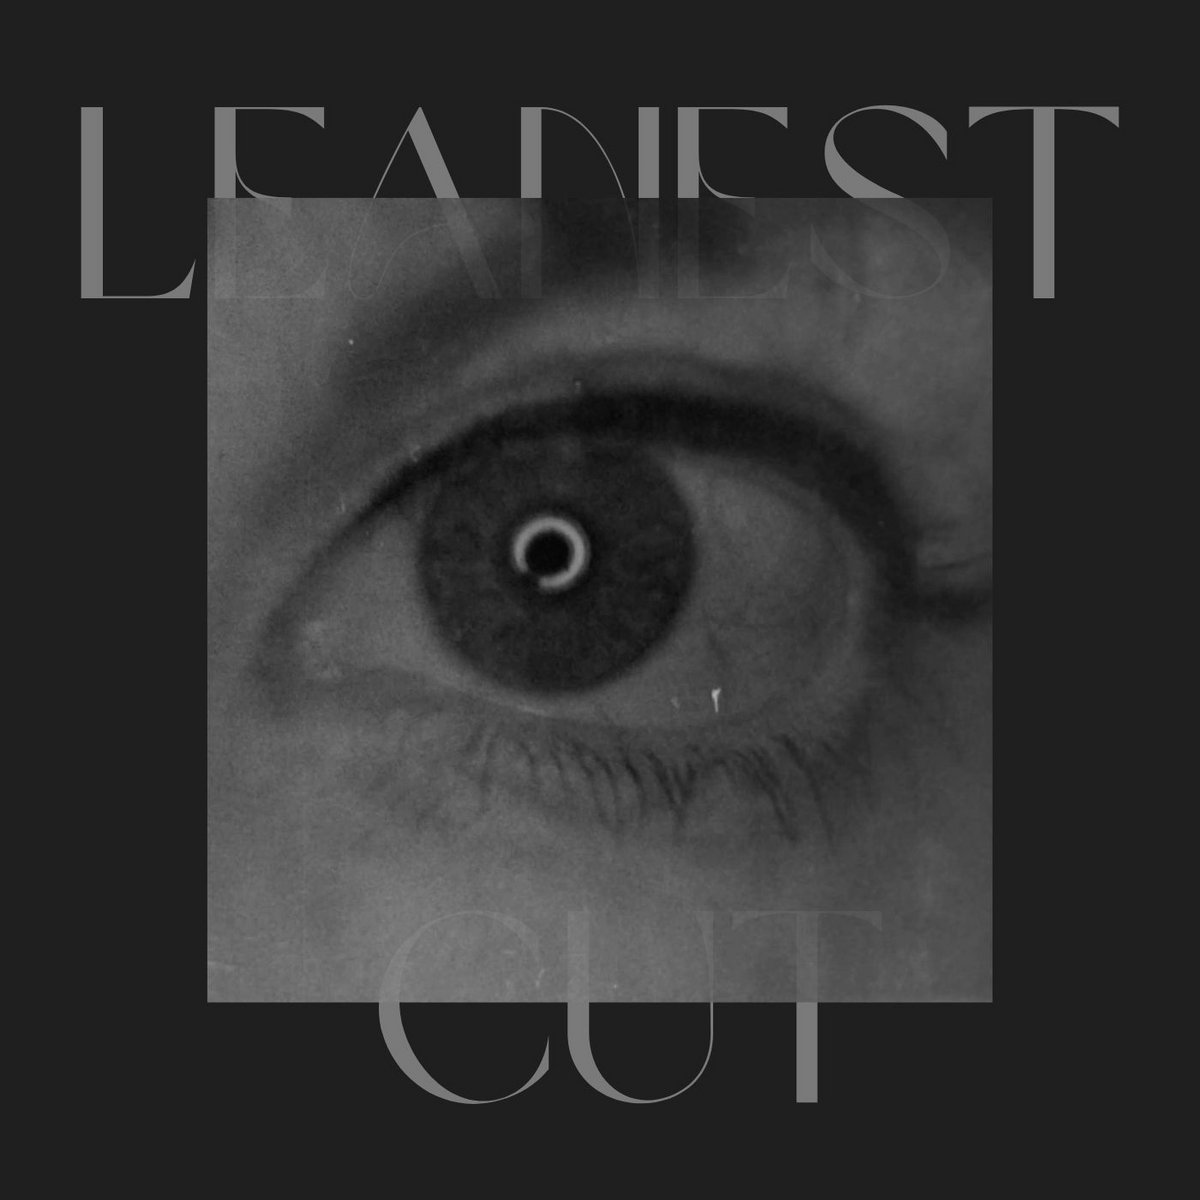 Leanest Cut